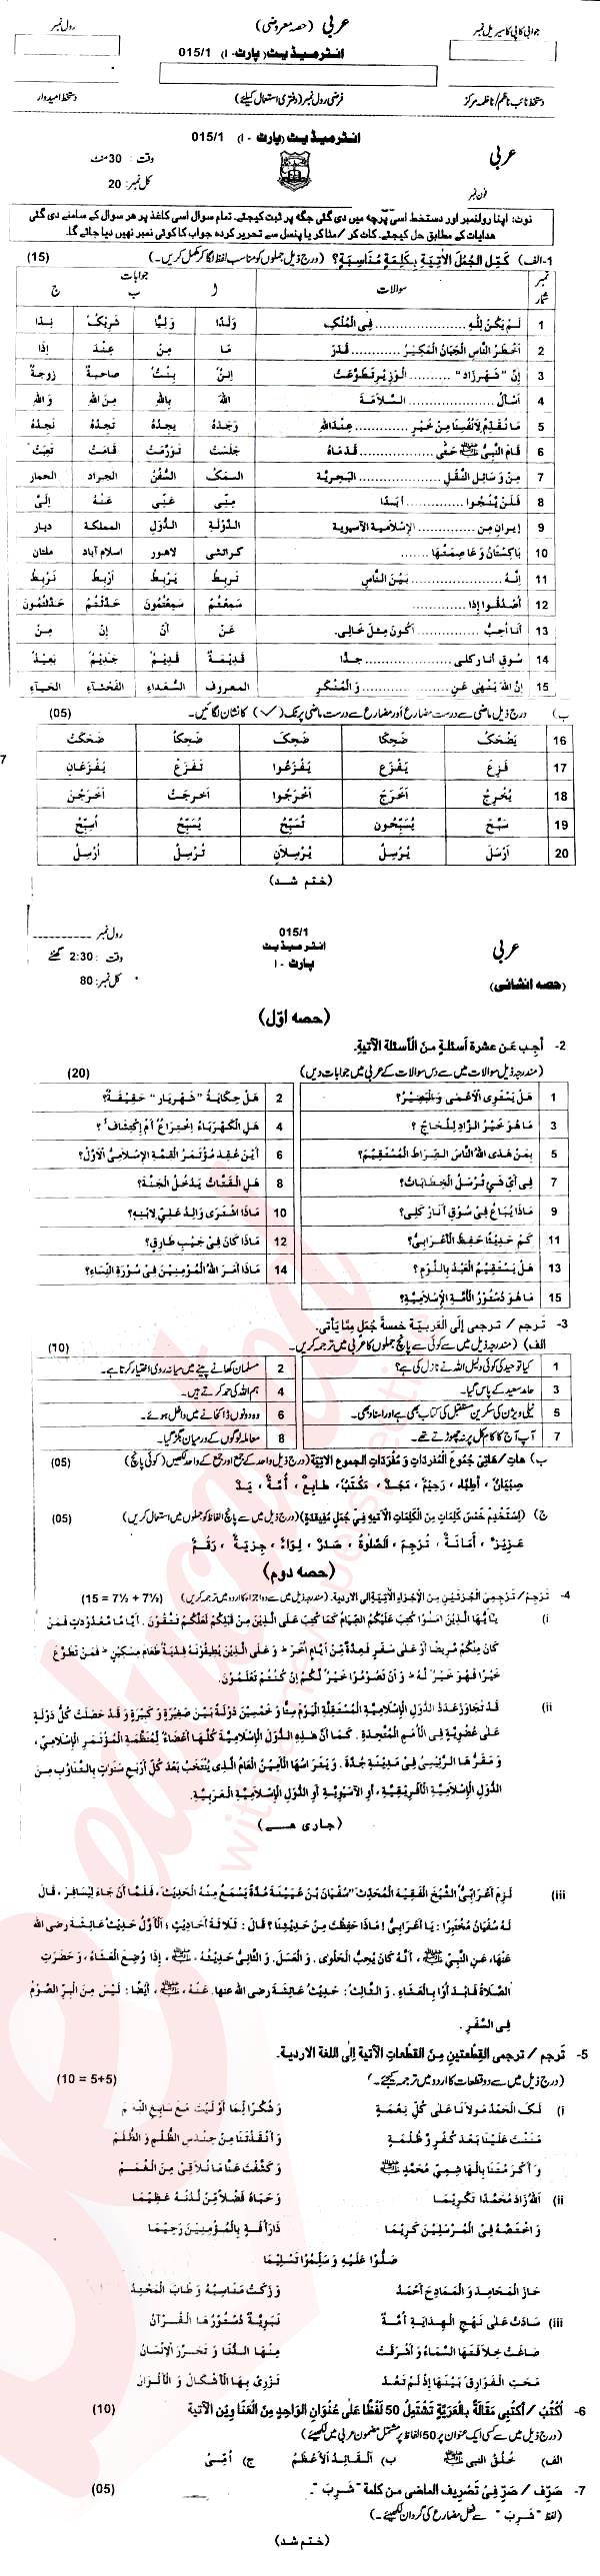 Arabic FA Part 2 Past Paper Group 1 BISE AJK 2015